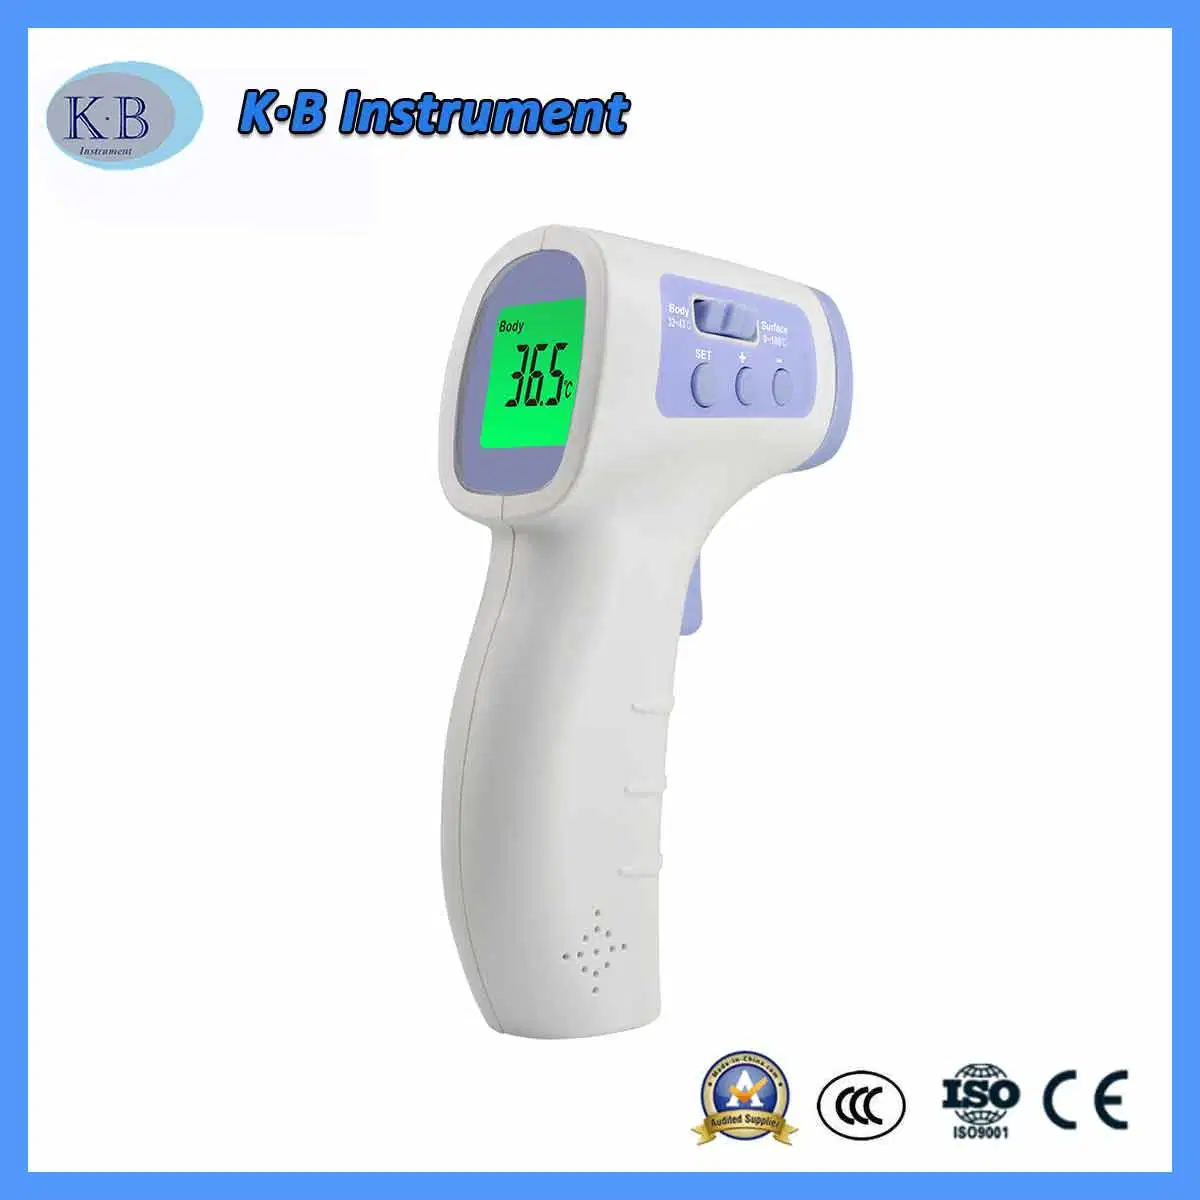 Stirn- und Ohrthermometer Infrarot-Thermometer Baby-Thermometer Digitalthermometer CE ISO FDA-Zulassung